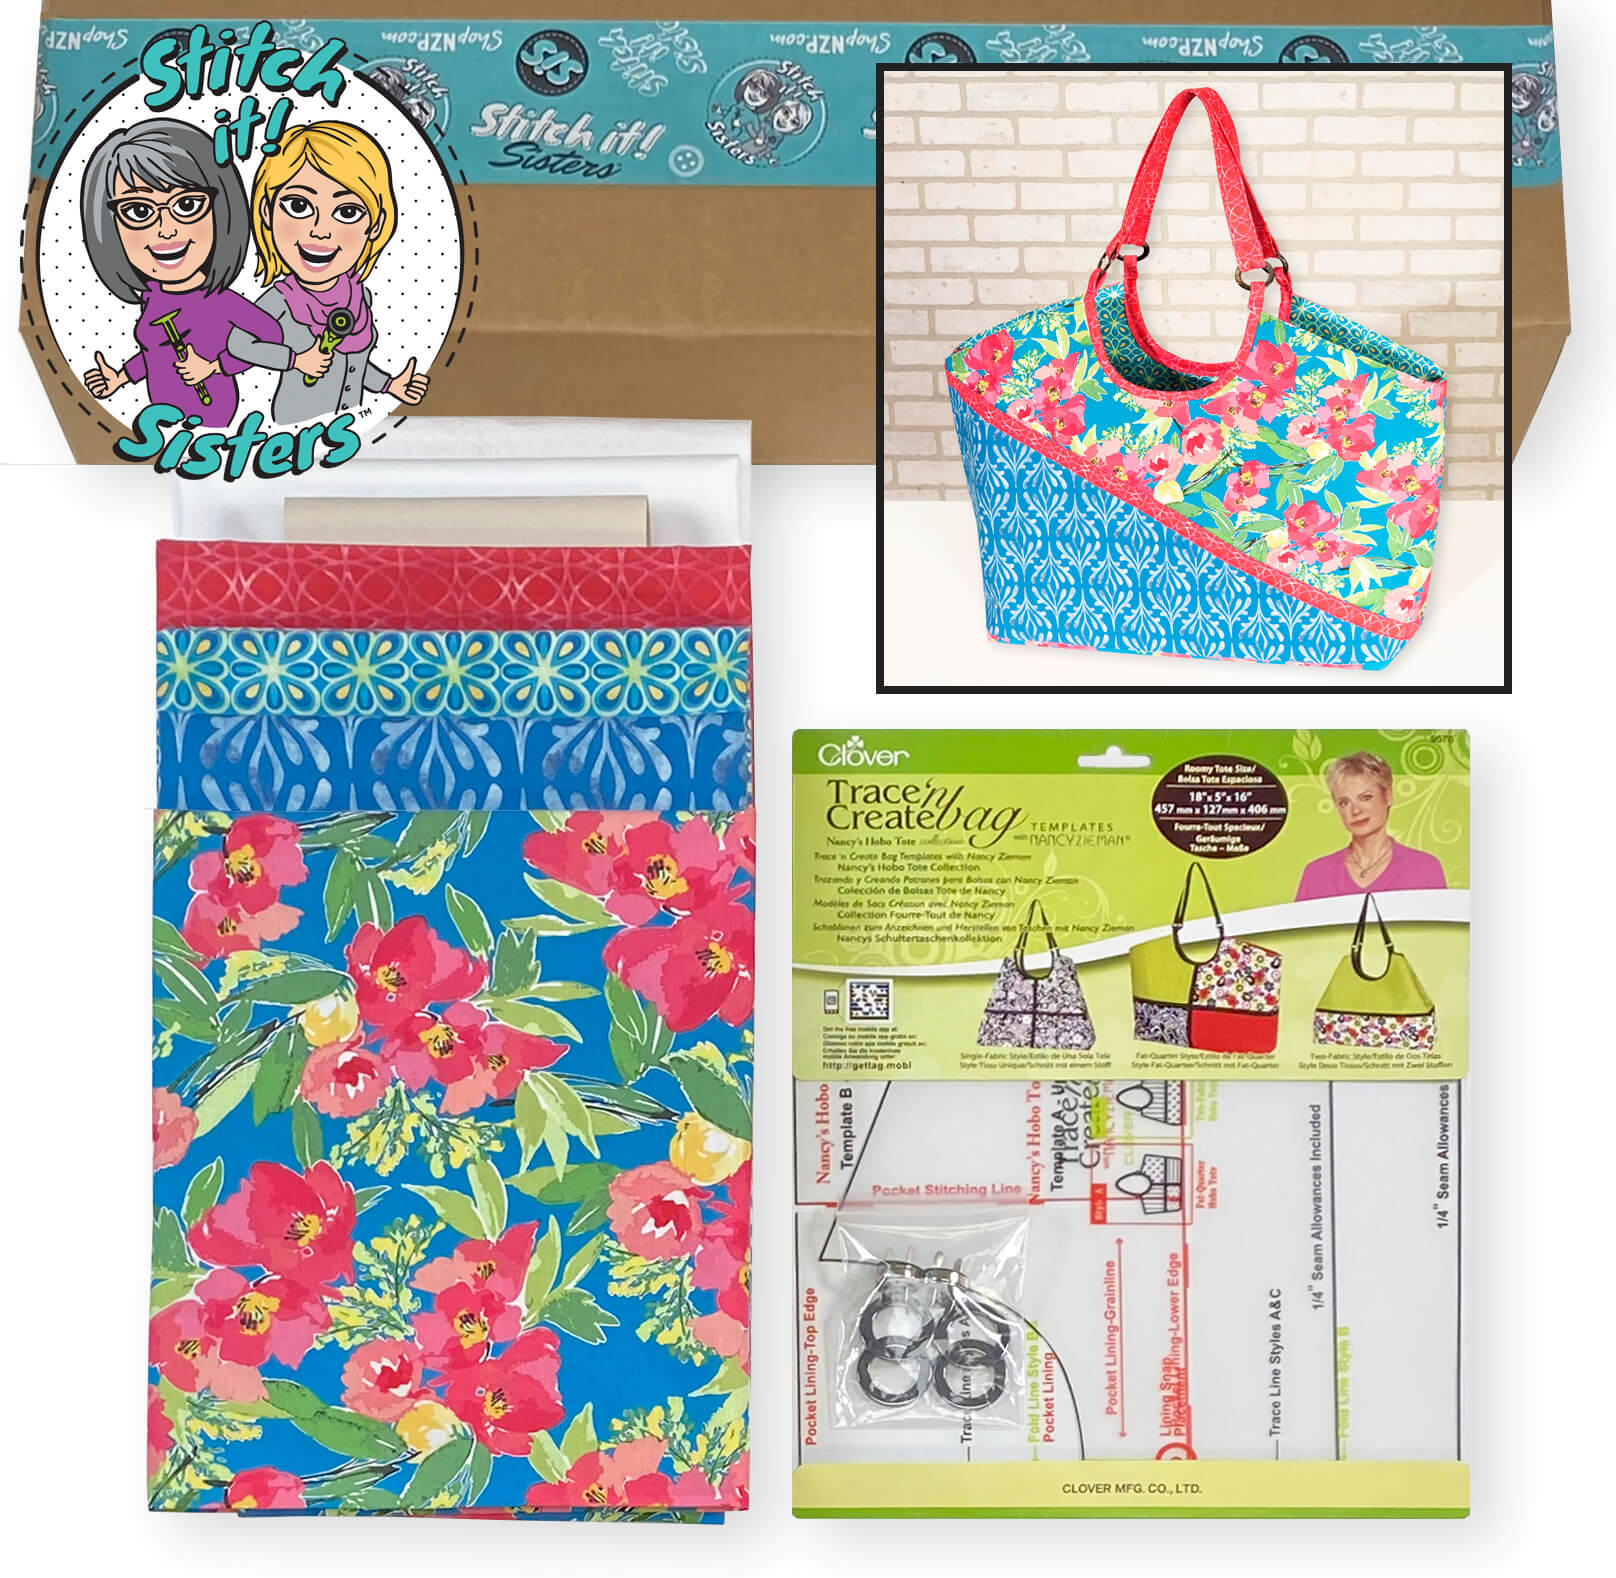 NEW! Exclusive Colorblocked Shoulder Bag Bundle Box available at Nancy Zieman Productions at ShopNZP.com